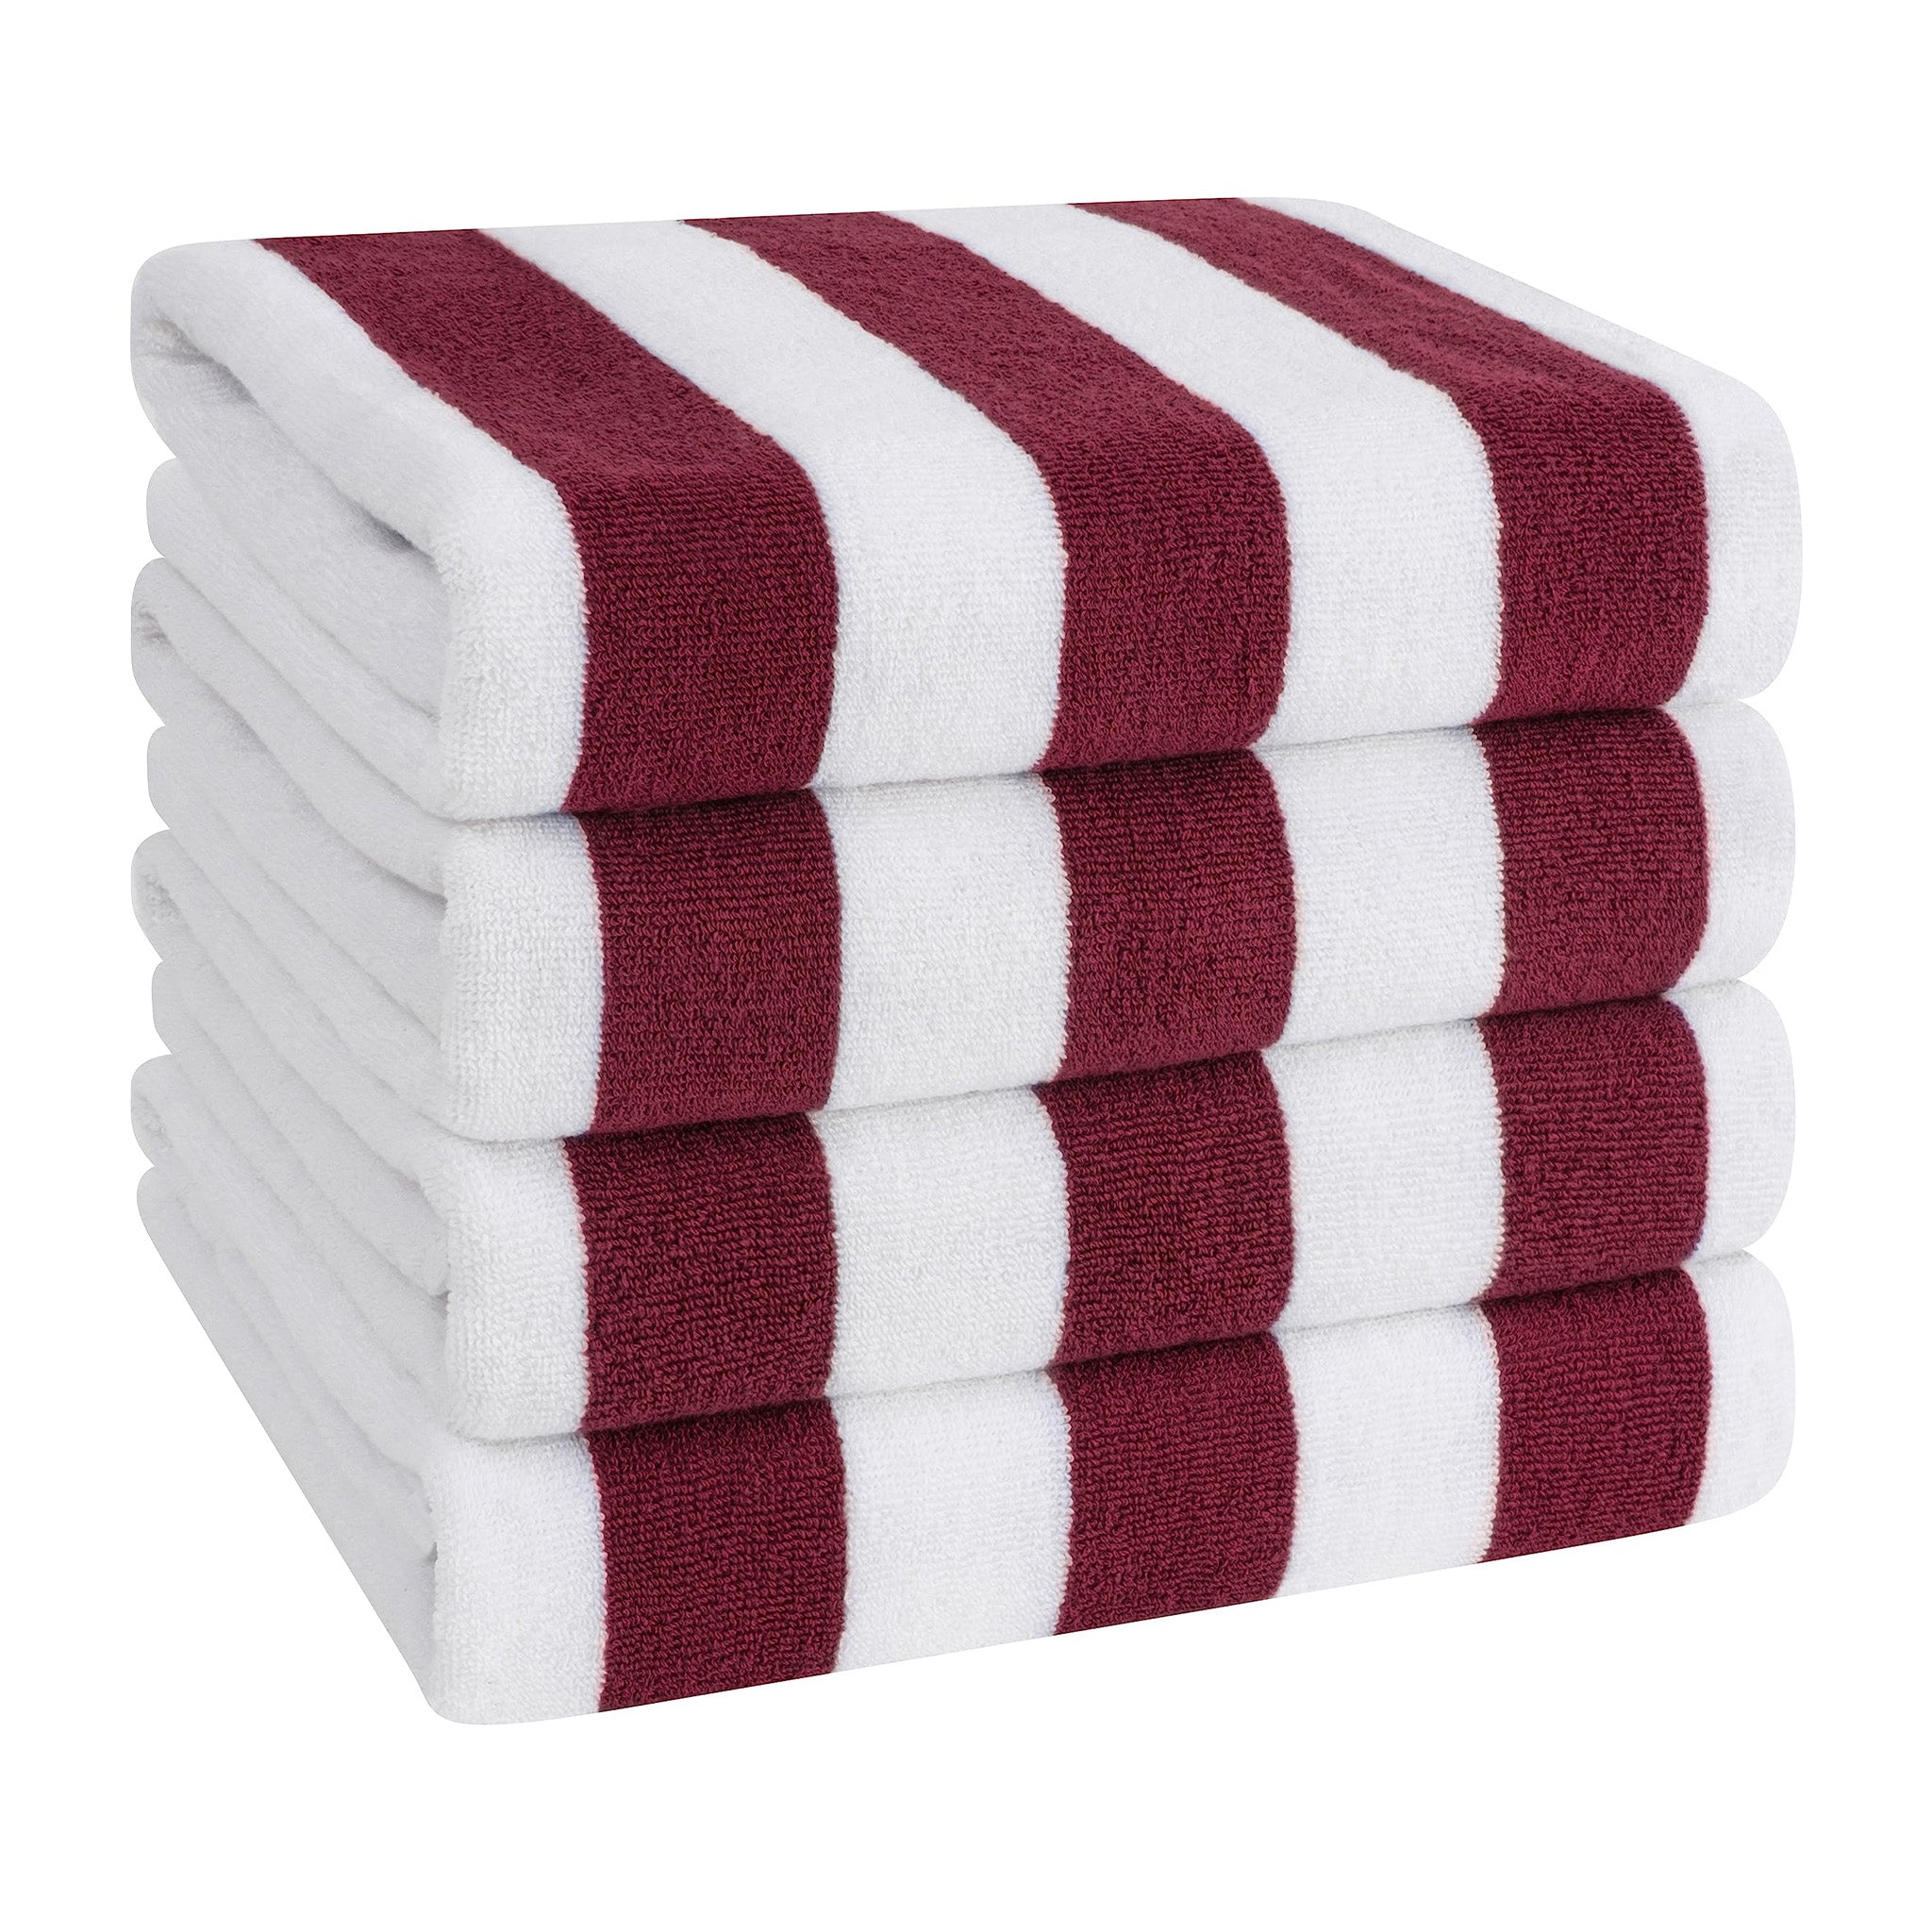 American Soft Linen 100% Cotton 4 Pack Beach Towels Cabana Striped Pool Towels -Bordeaux-1